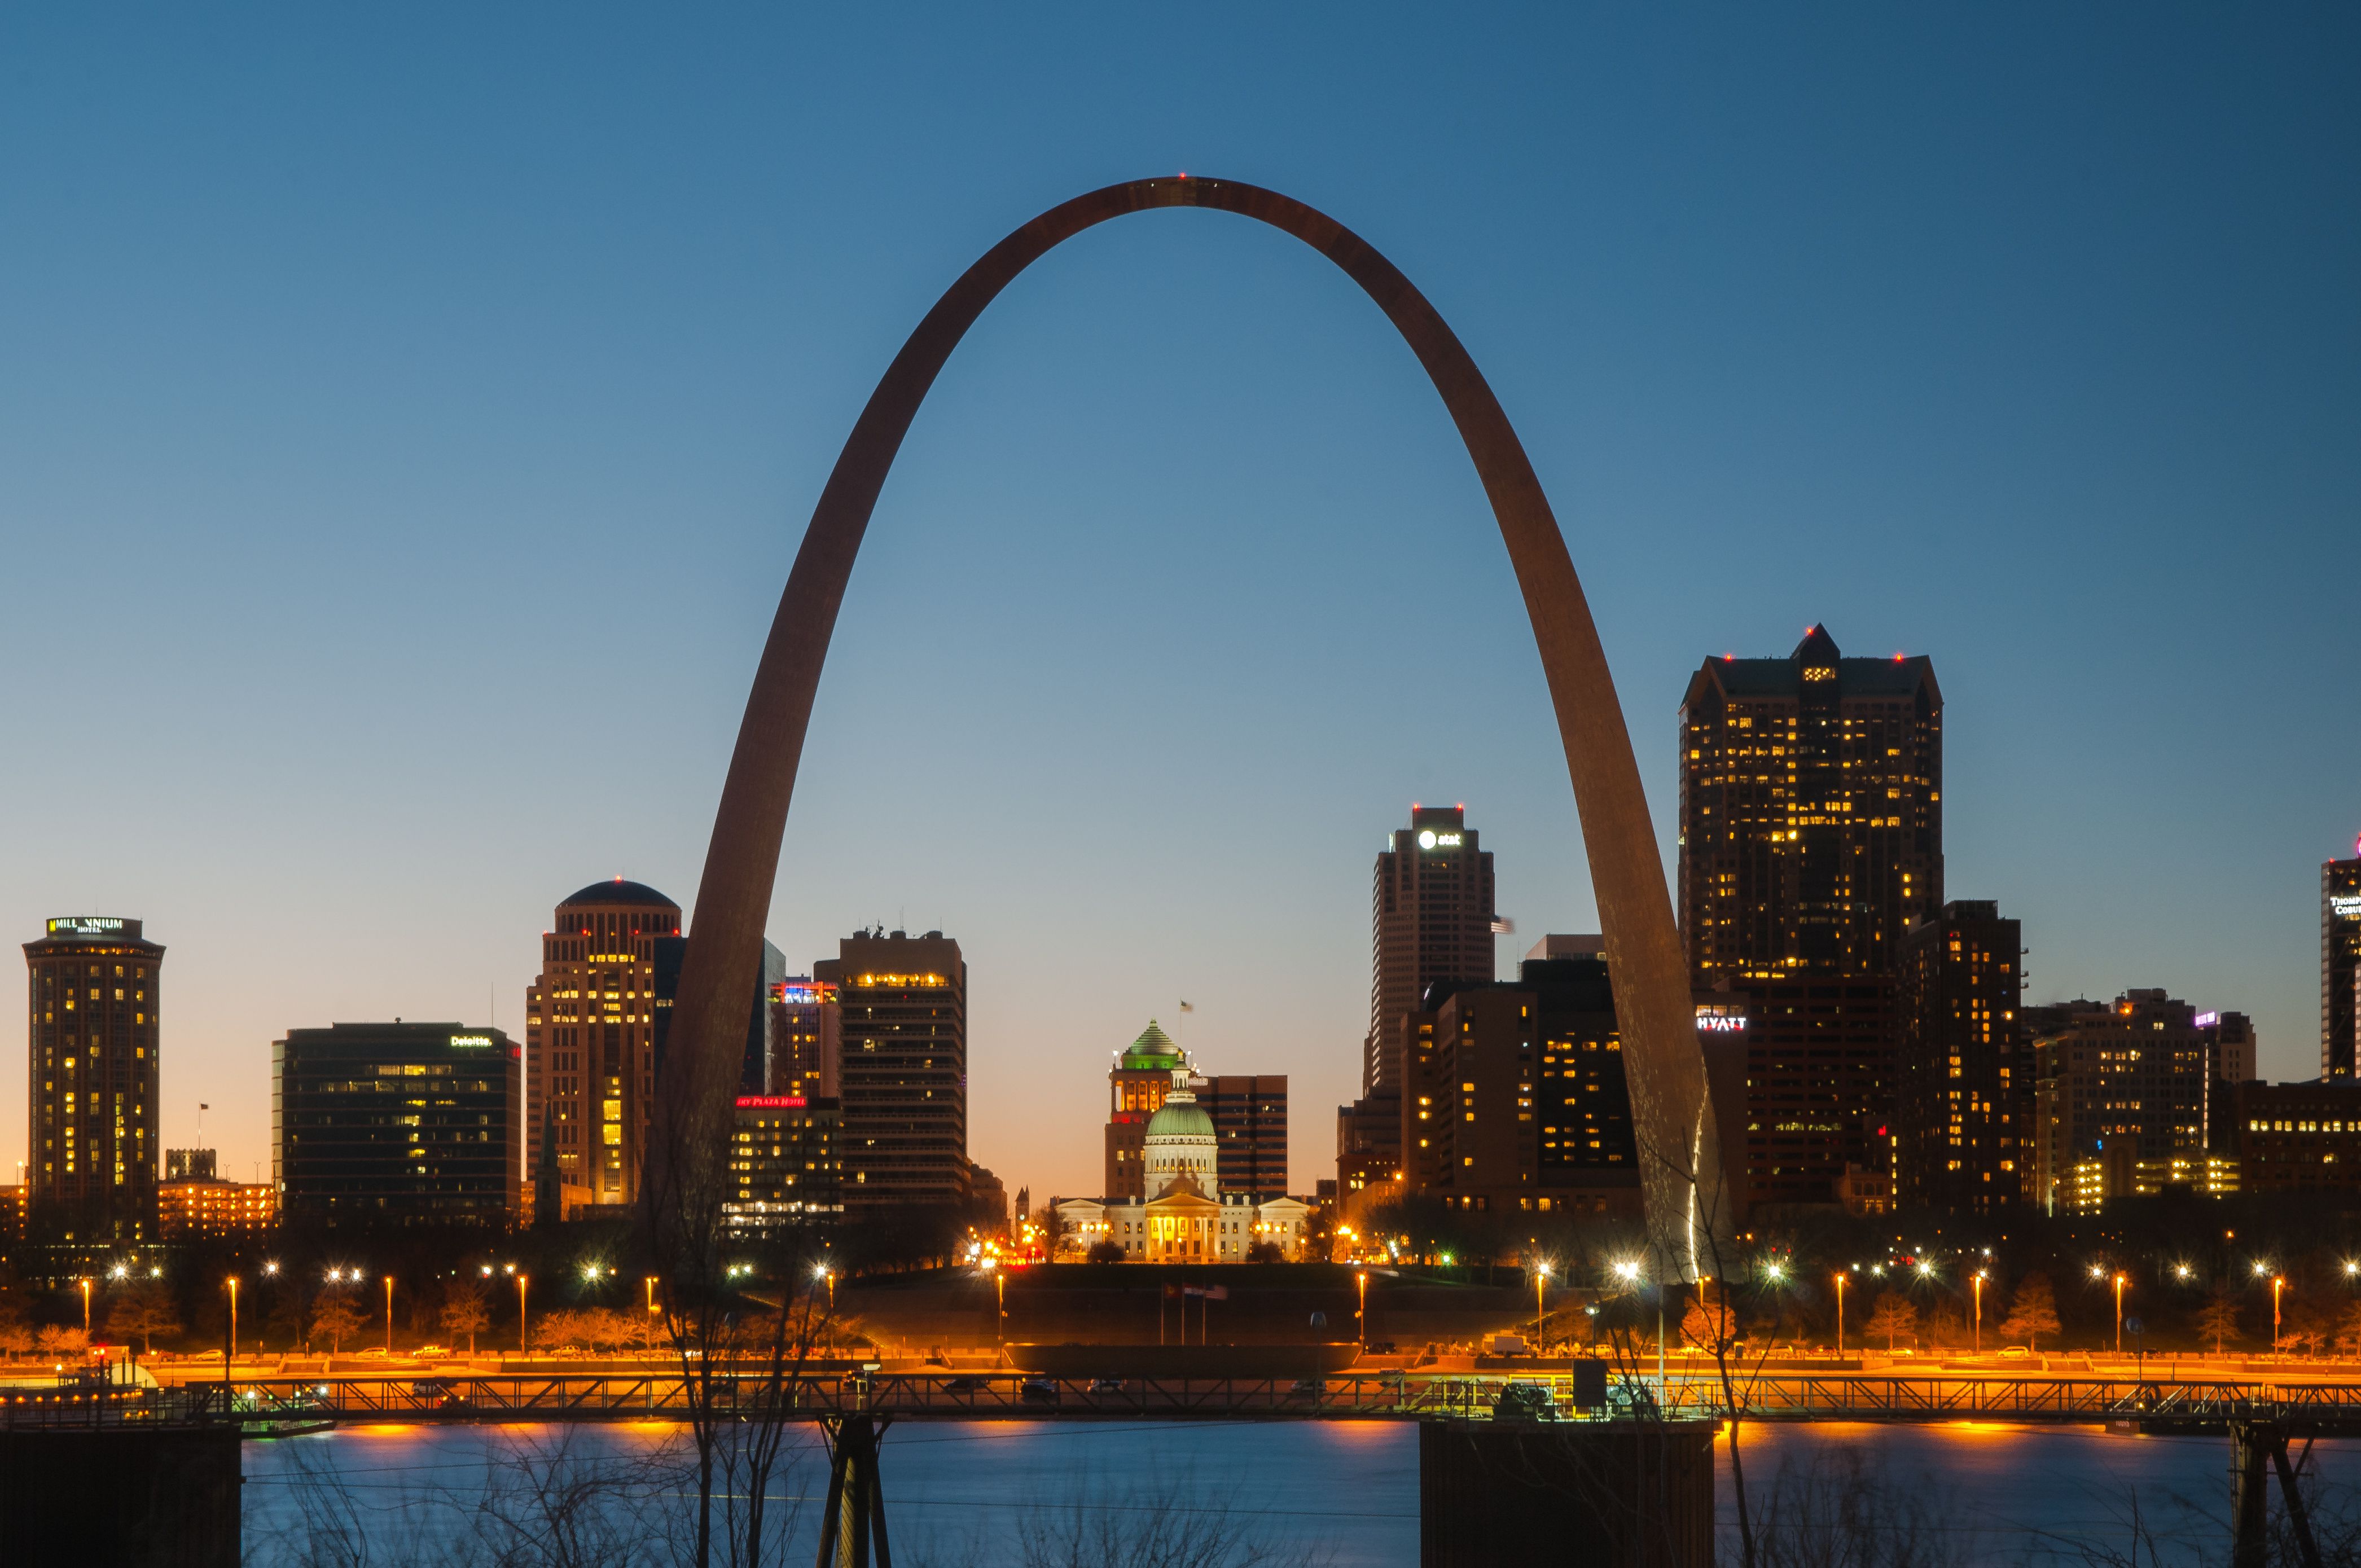 Visit the Gateway Arch in St. Louis, Missouri